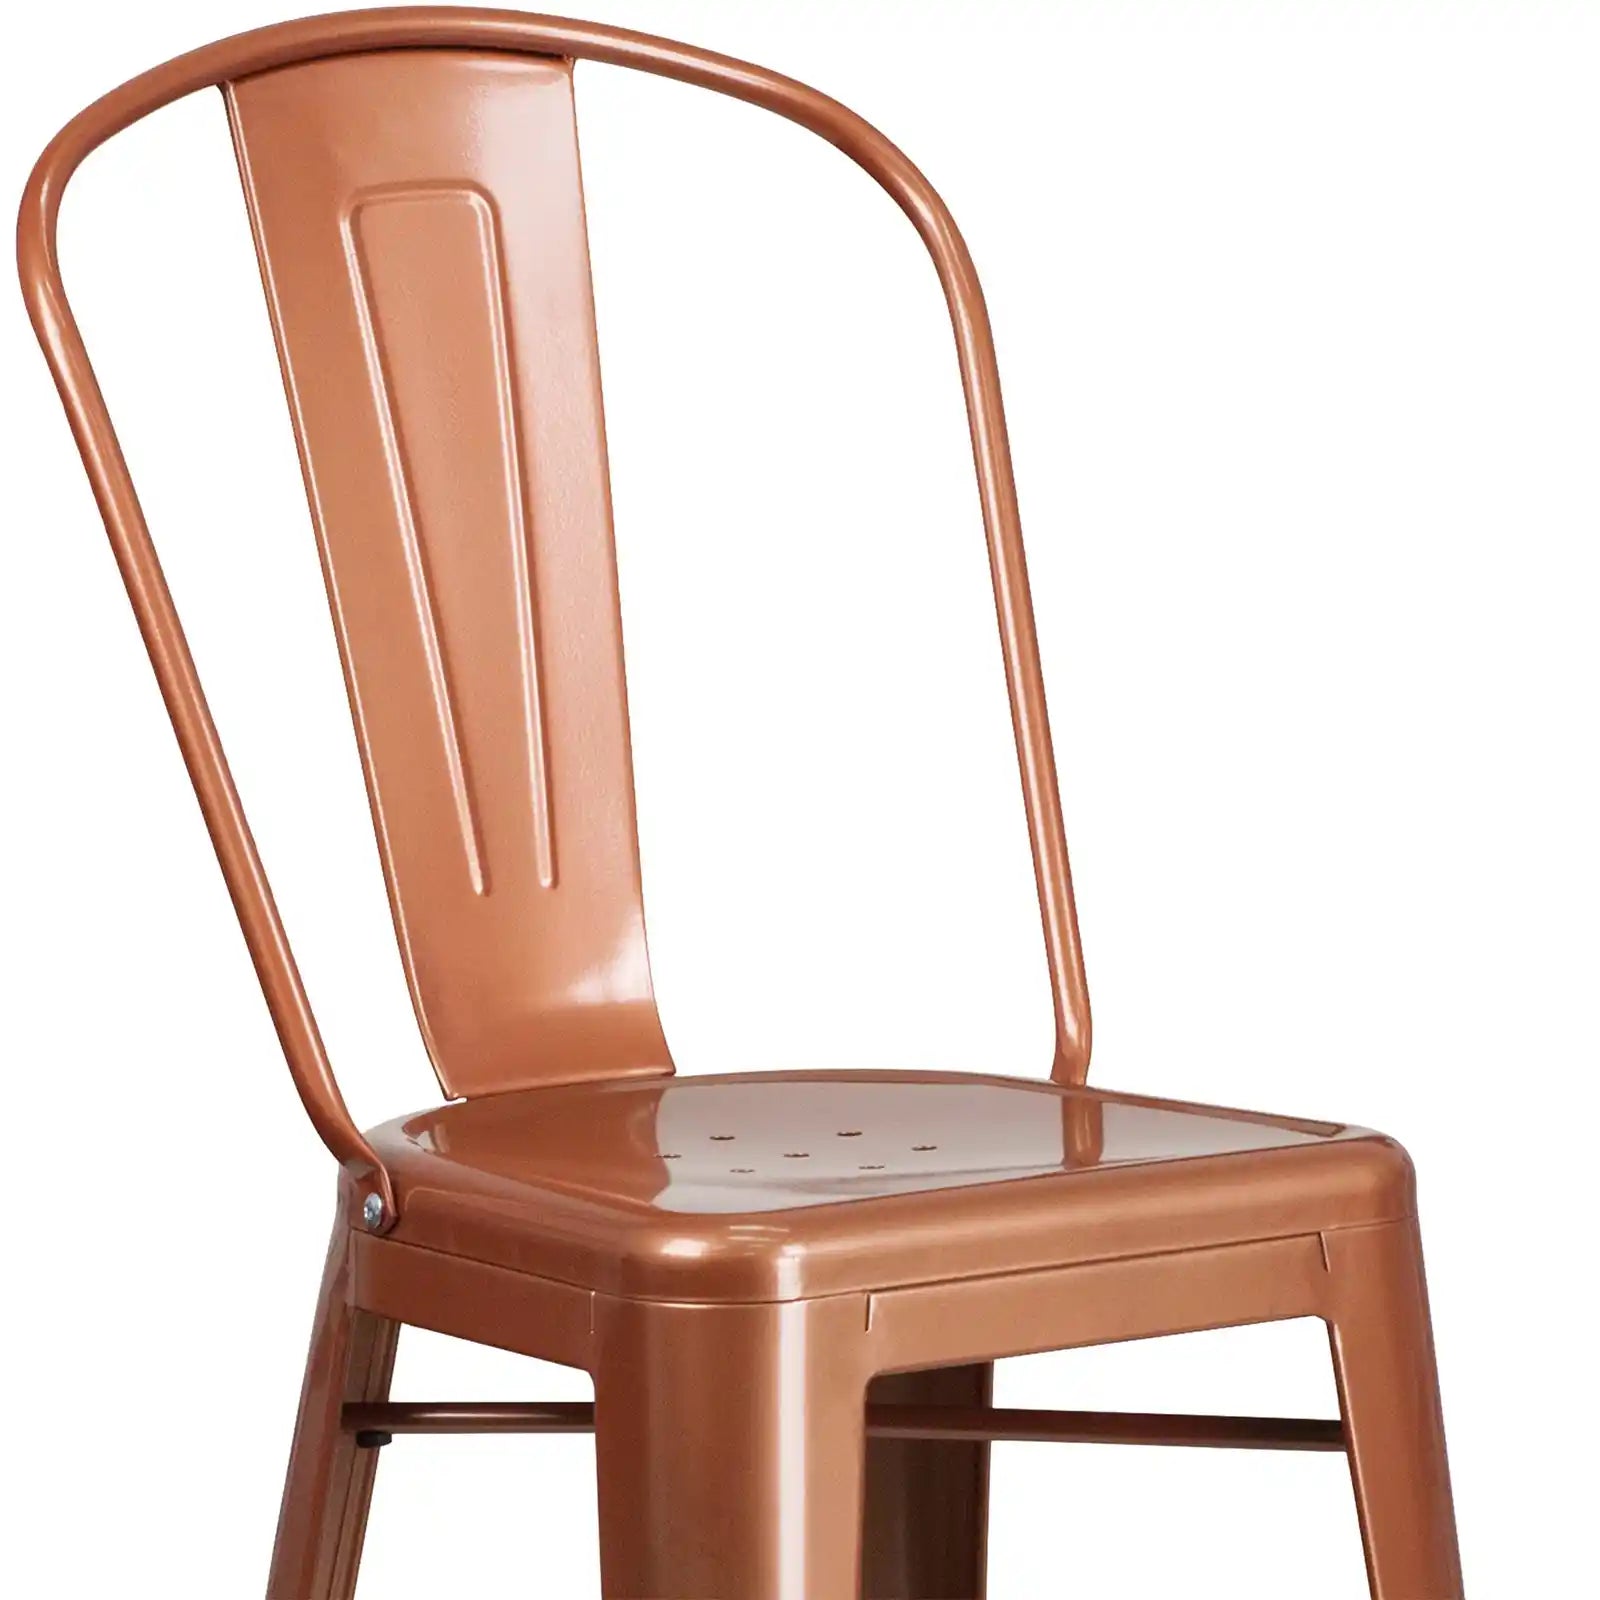 30 Inch High Copper Metal Indoor-Outdoor Barstool with Back